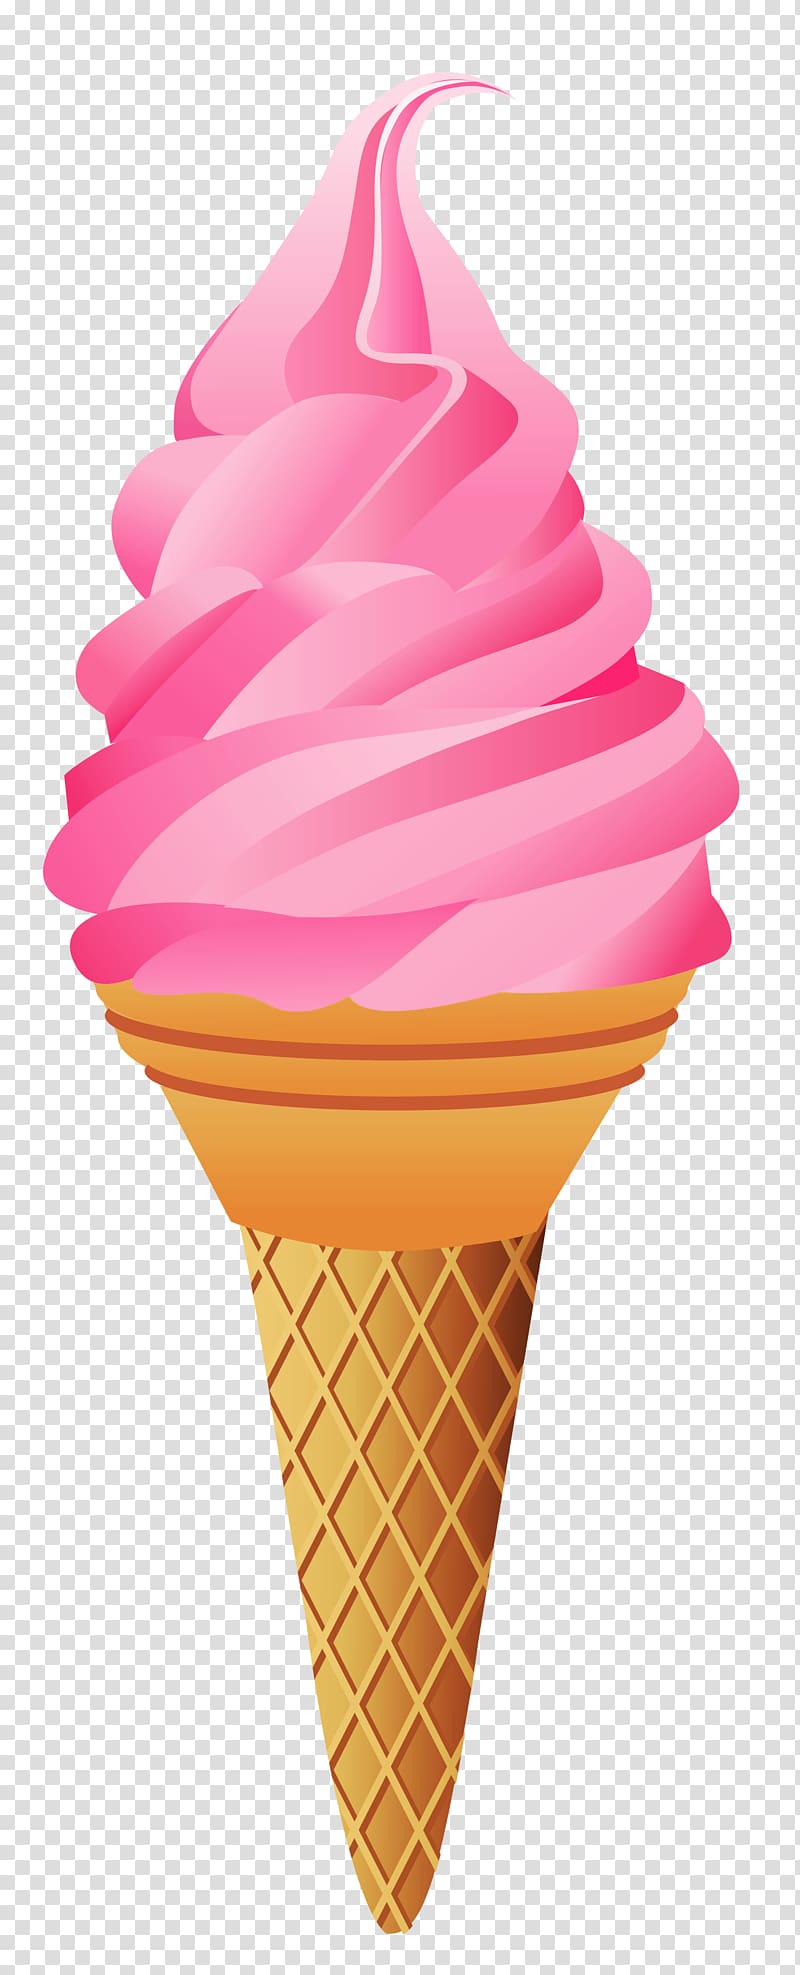 chocolate ice cream cone clip art